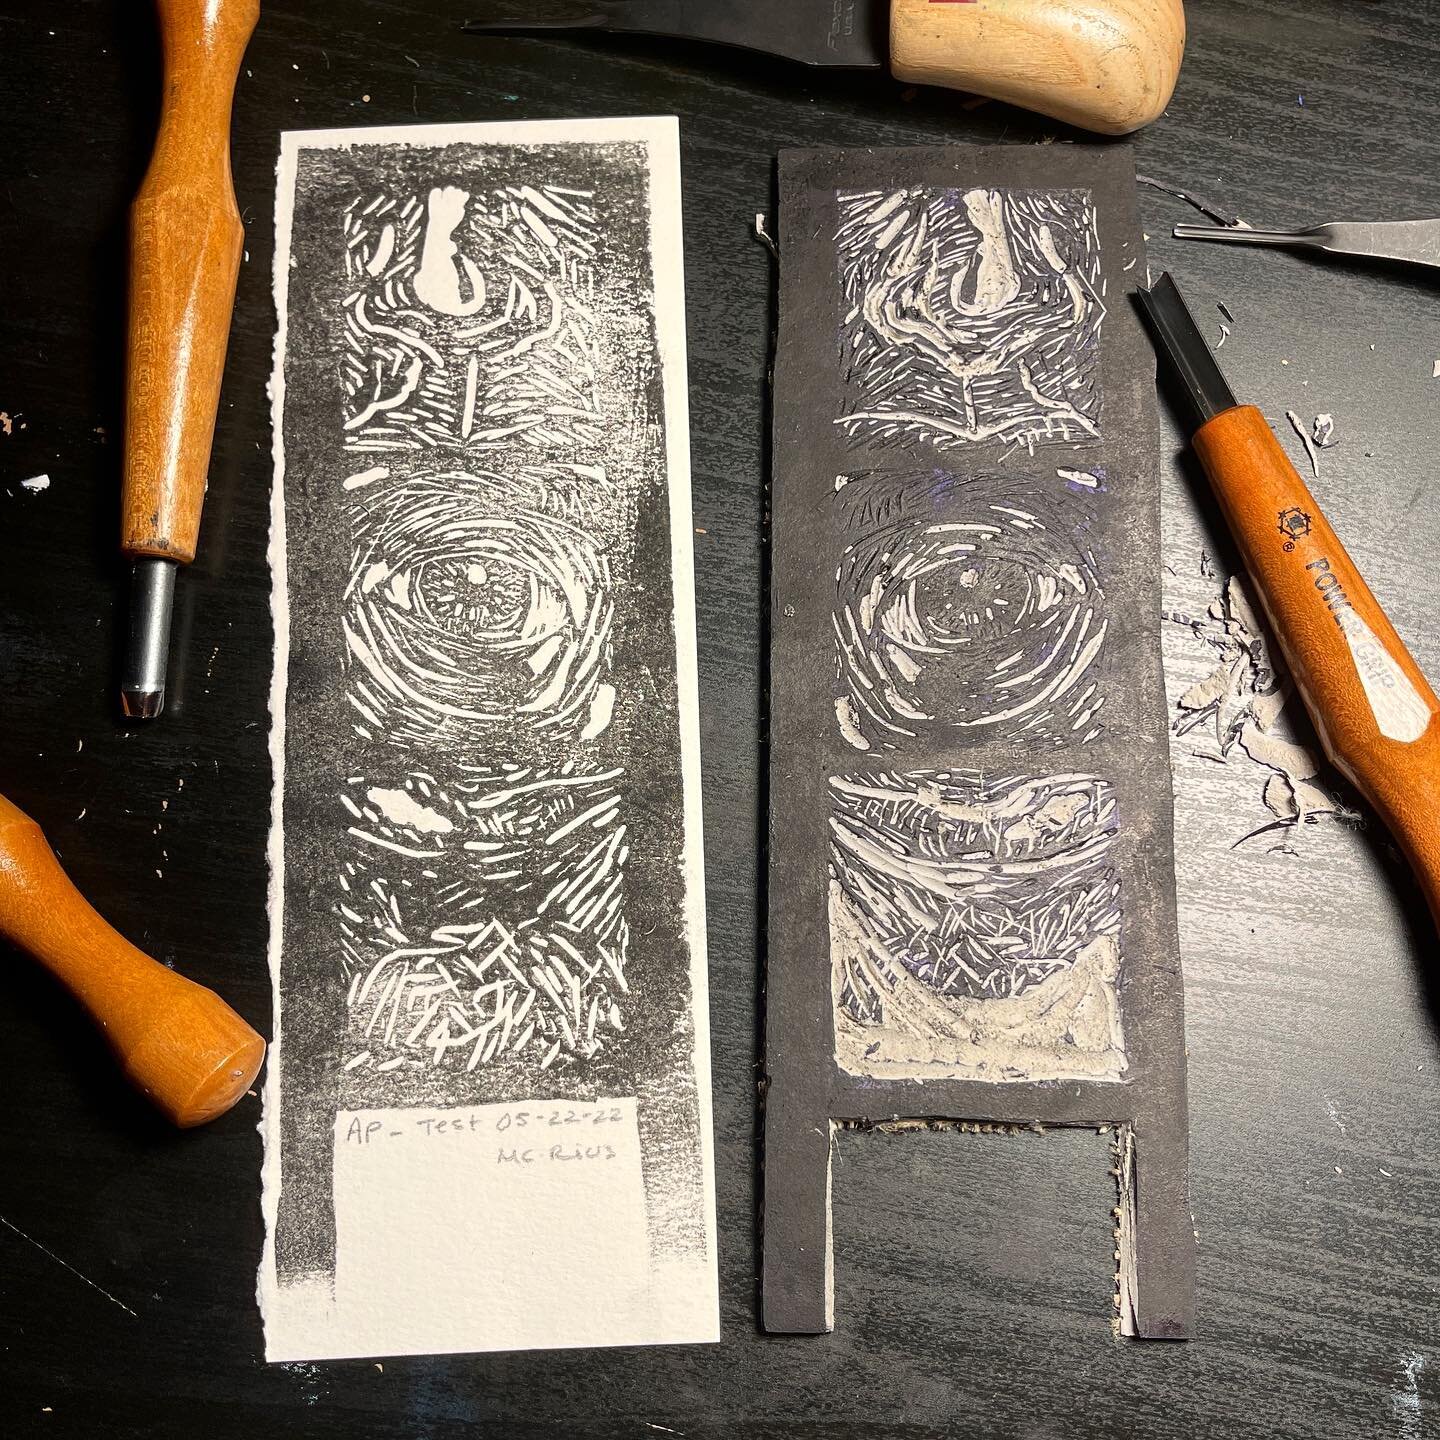 first print vs. carving block 🤗

&bull;
&bull;
&bull;
&bull;
&bull; #printmaking #miniprint #openpressproject #printmakersofinstagram #print #carving #linoblock #linocut #lino #photostrip #portrait